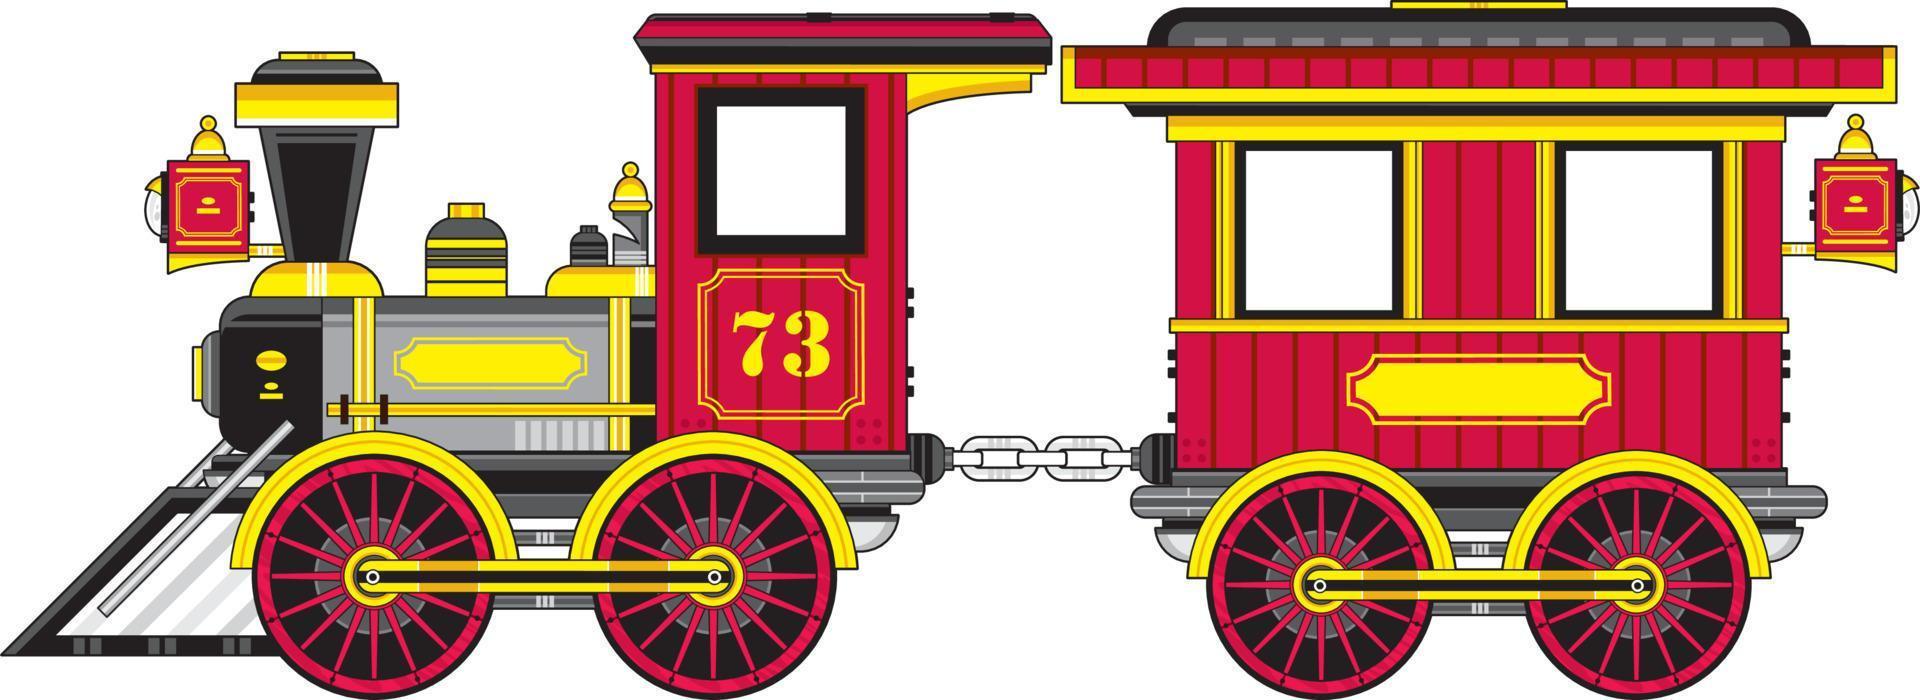 Cartoon Retro Wild West Steam Train and Carriage vector